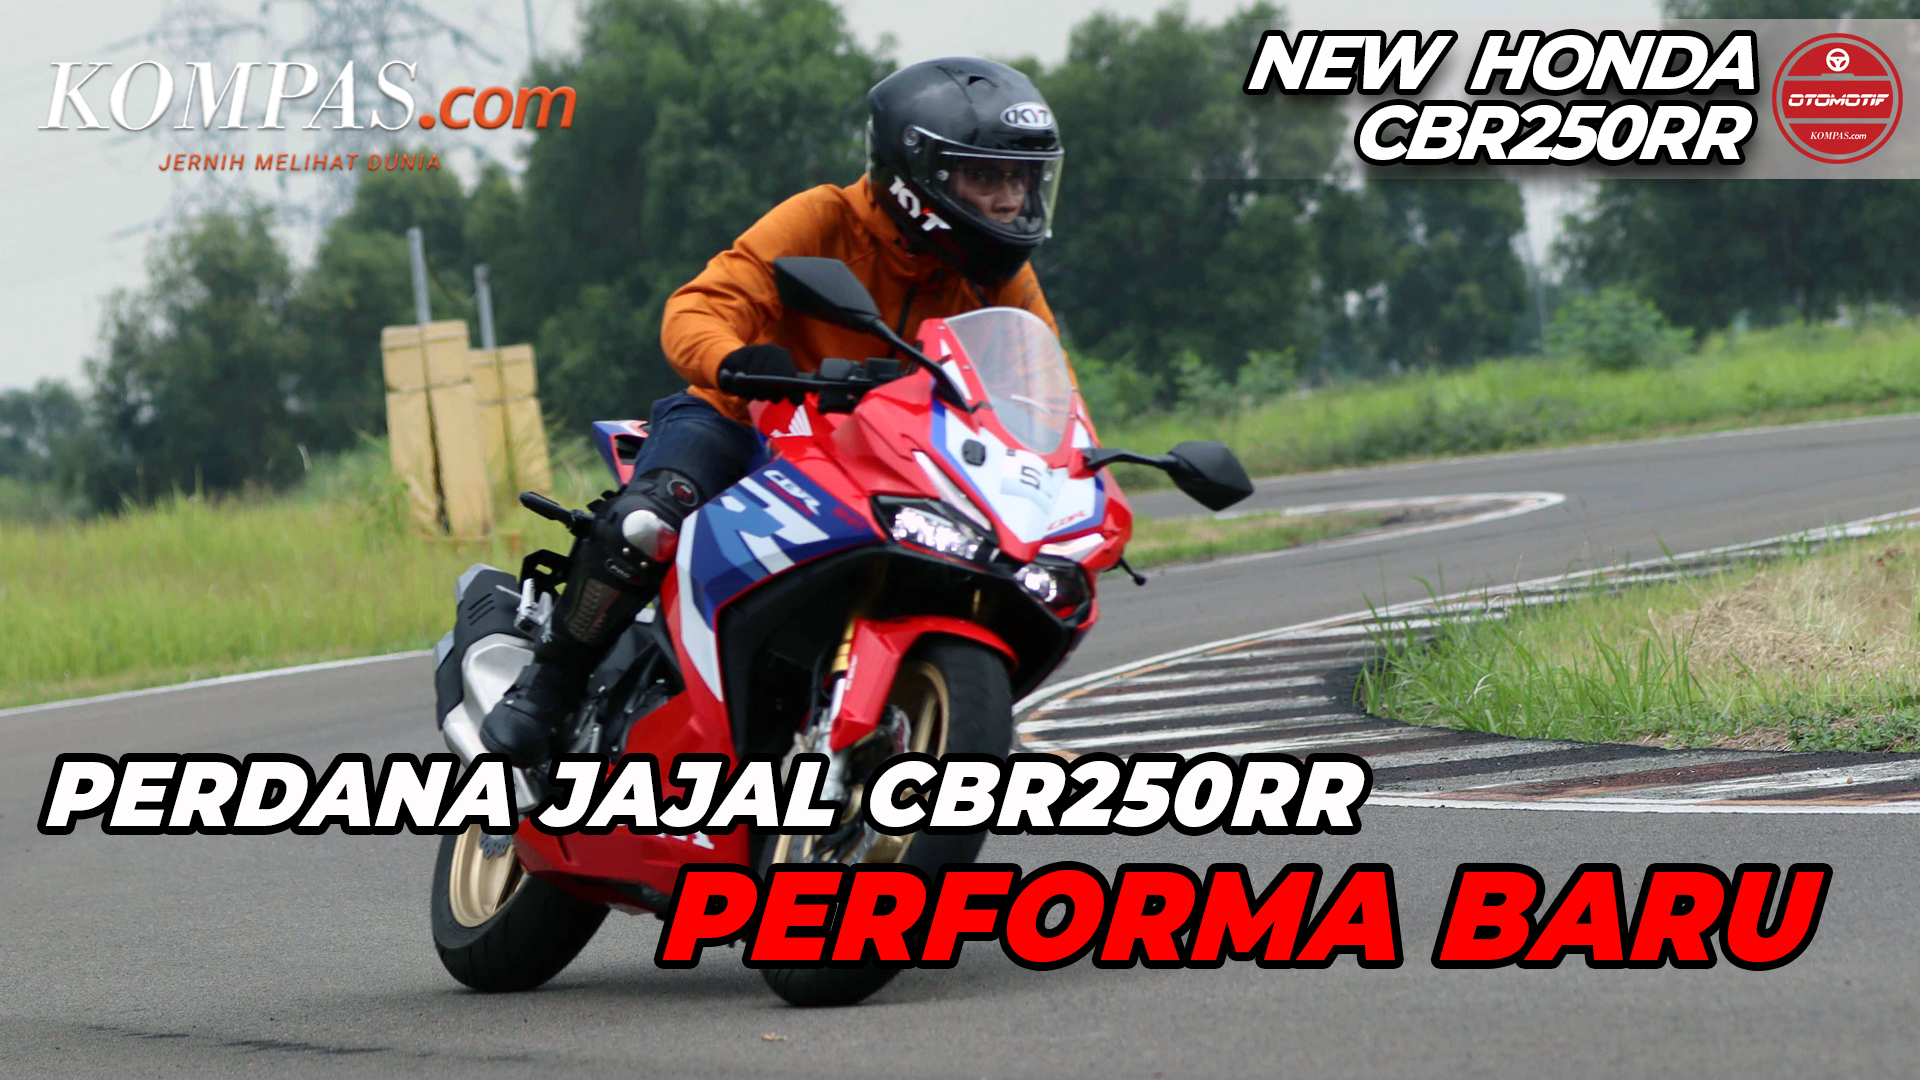 Perdana Jajal Performa Baru Honda CBR250RR